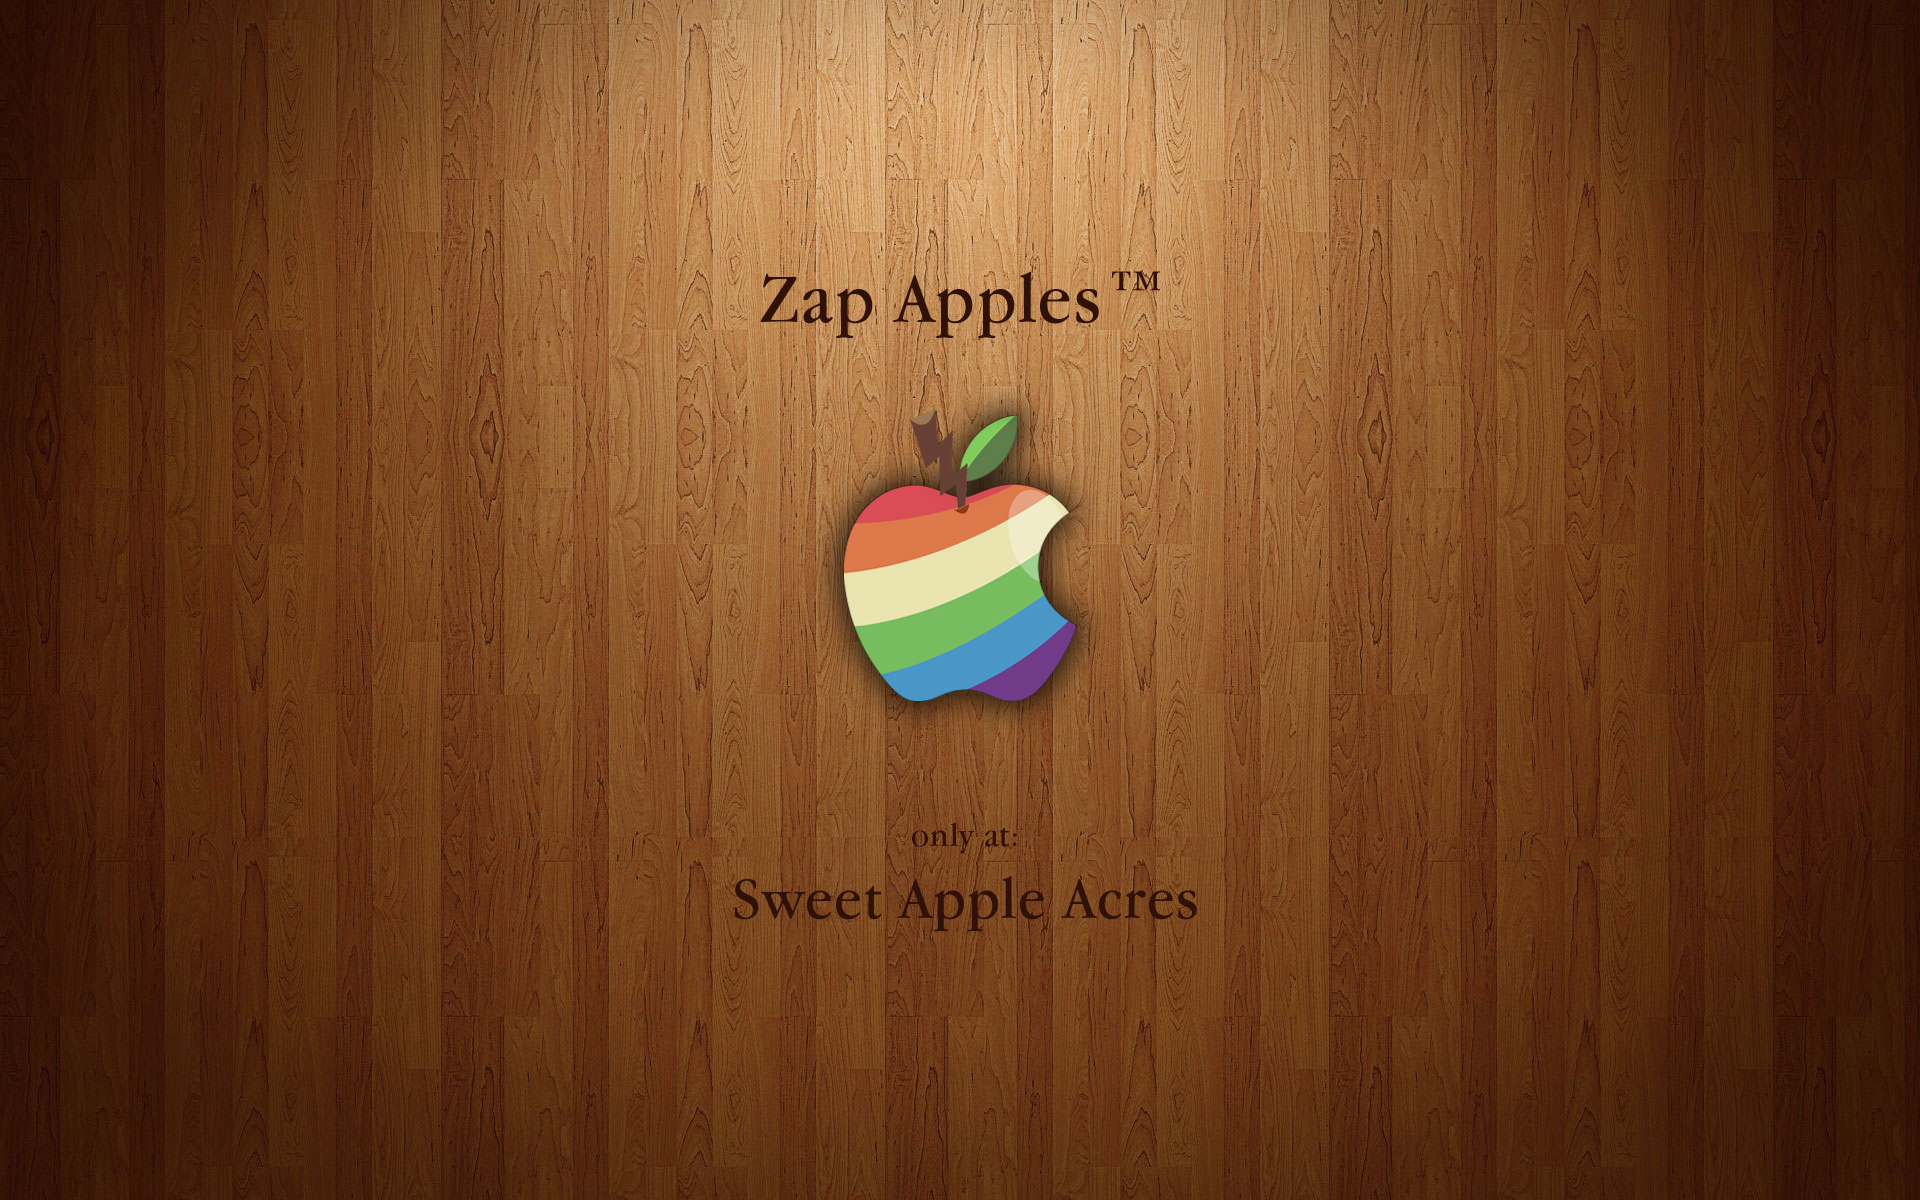 Apple only. Zap Apple. Only эпл. Обои эпл. Пародия на логотип Apple.